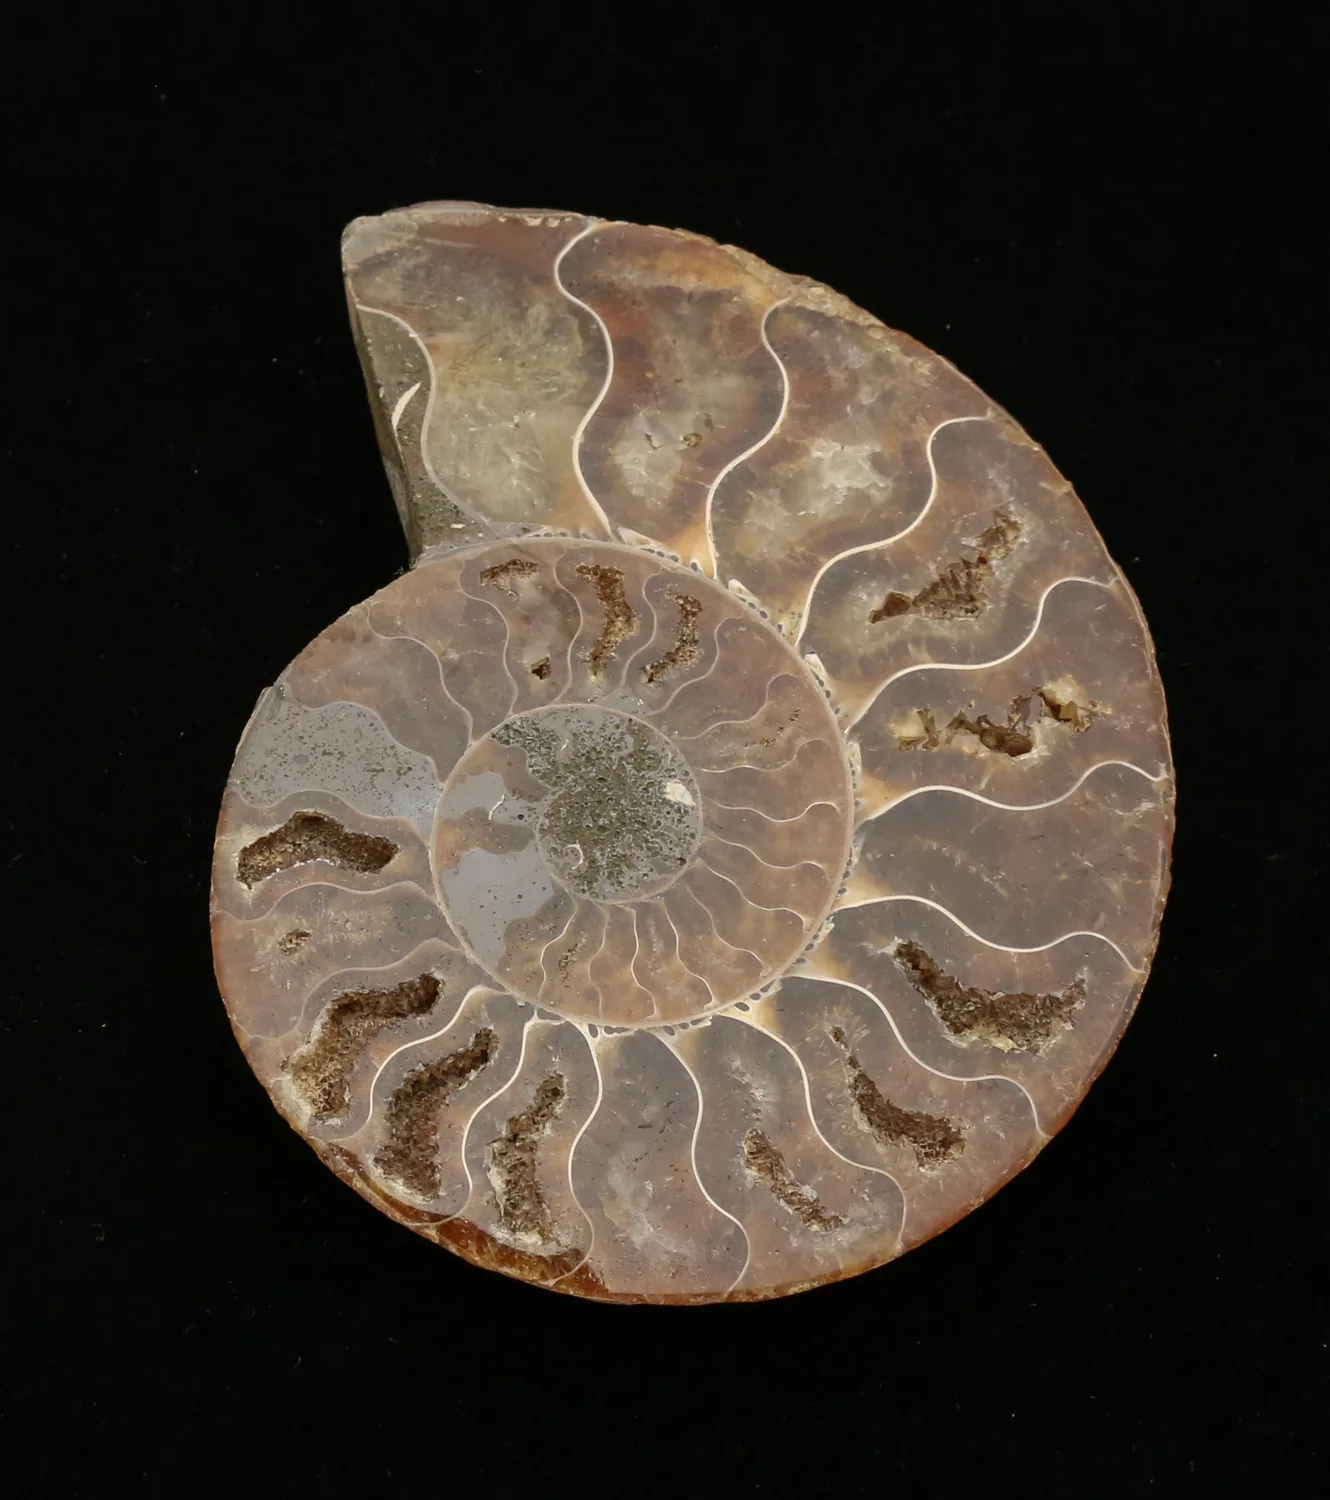 Ammonite, Madagascar, cleoniceras cleon Prehistoric Online